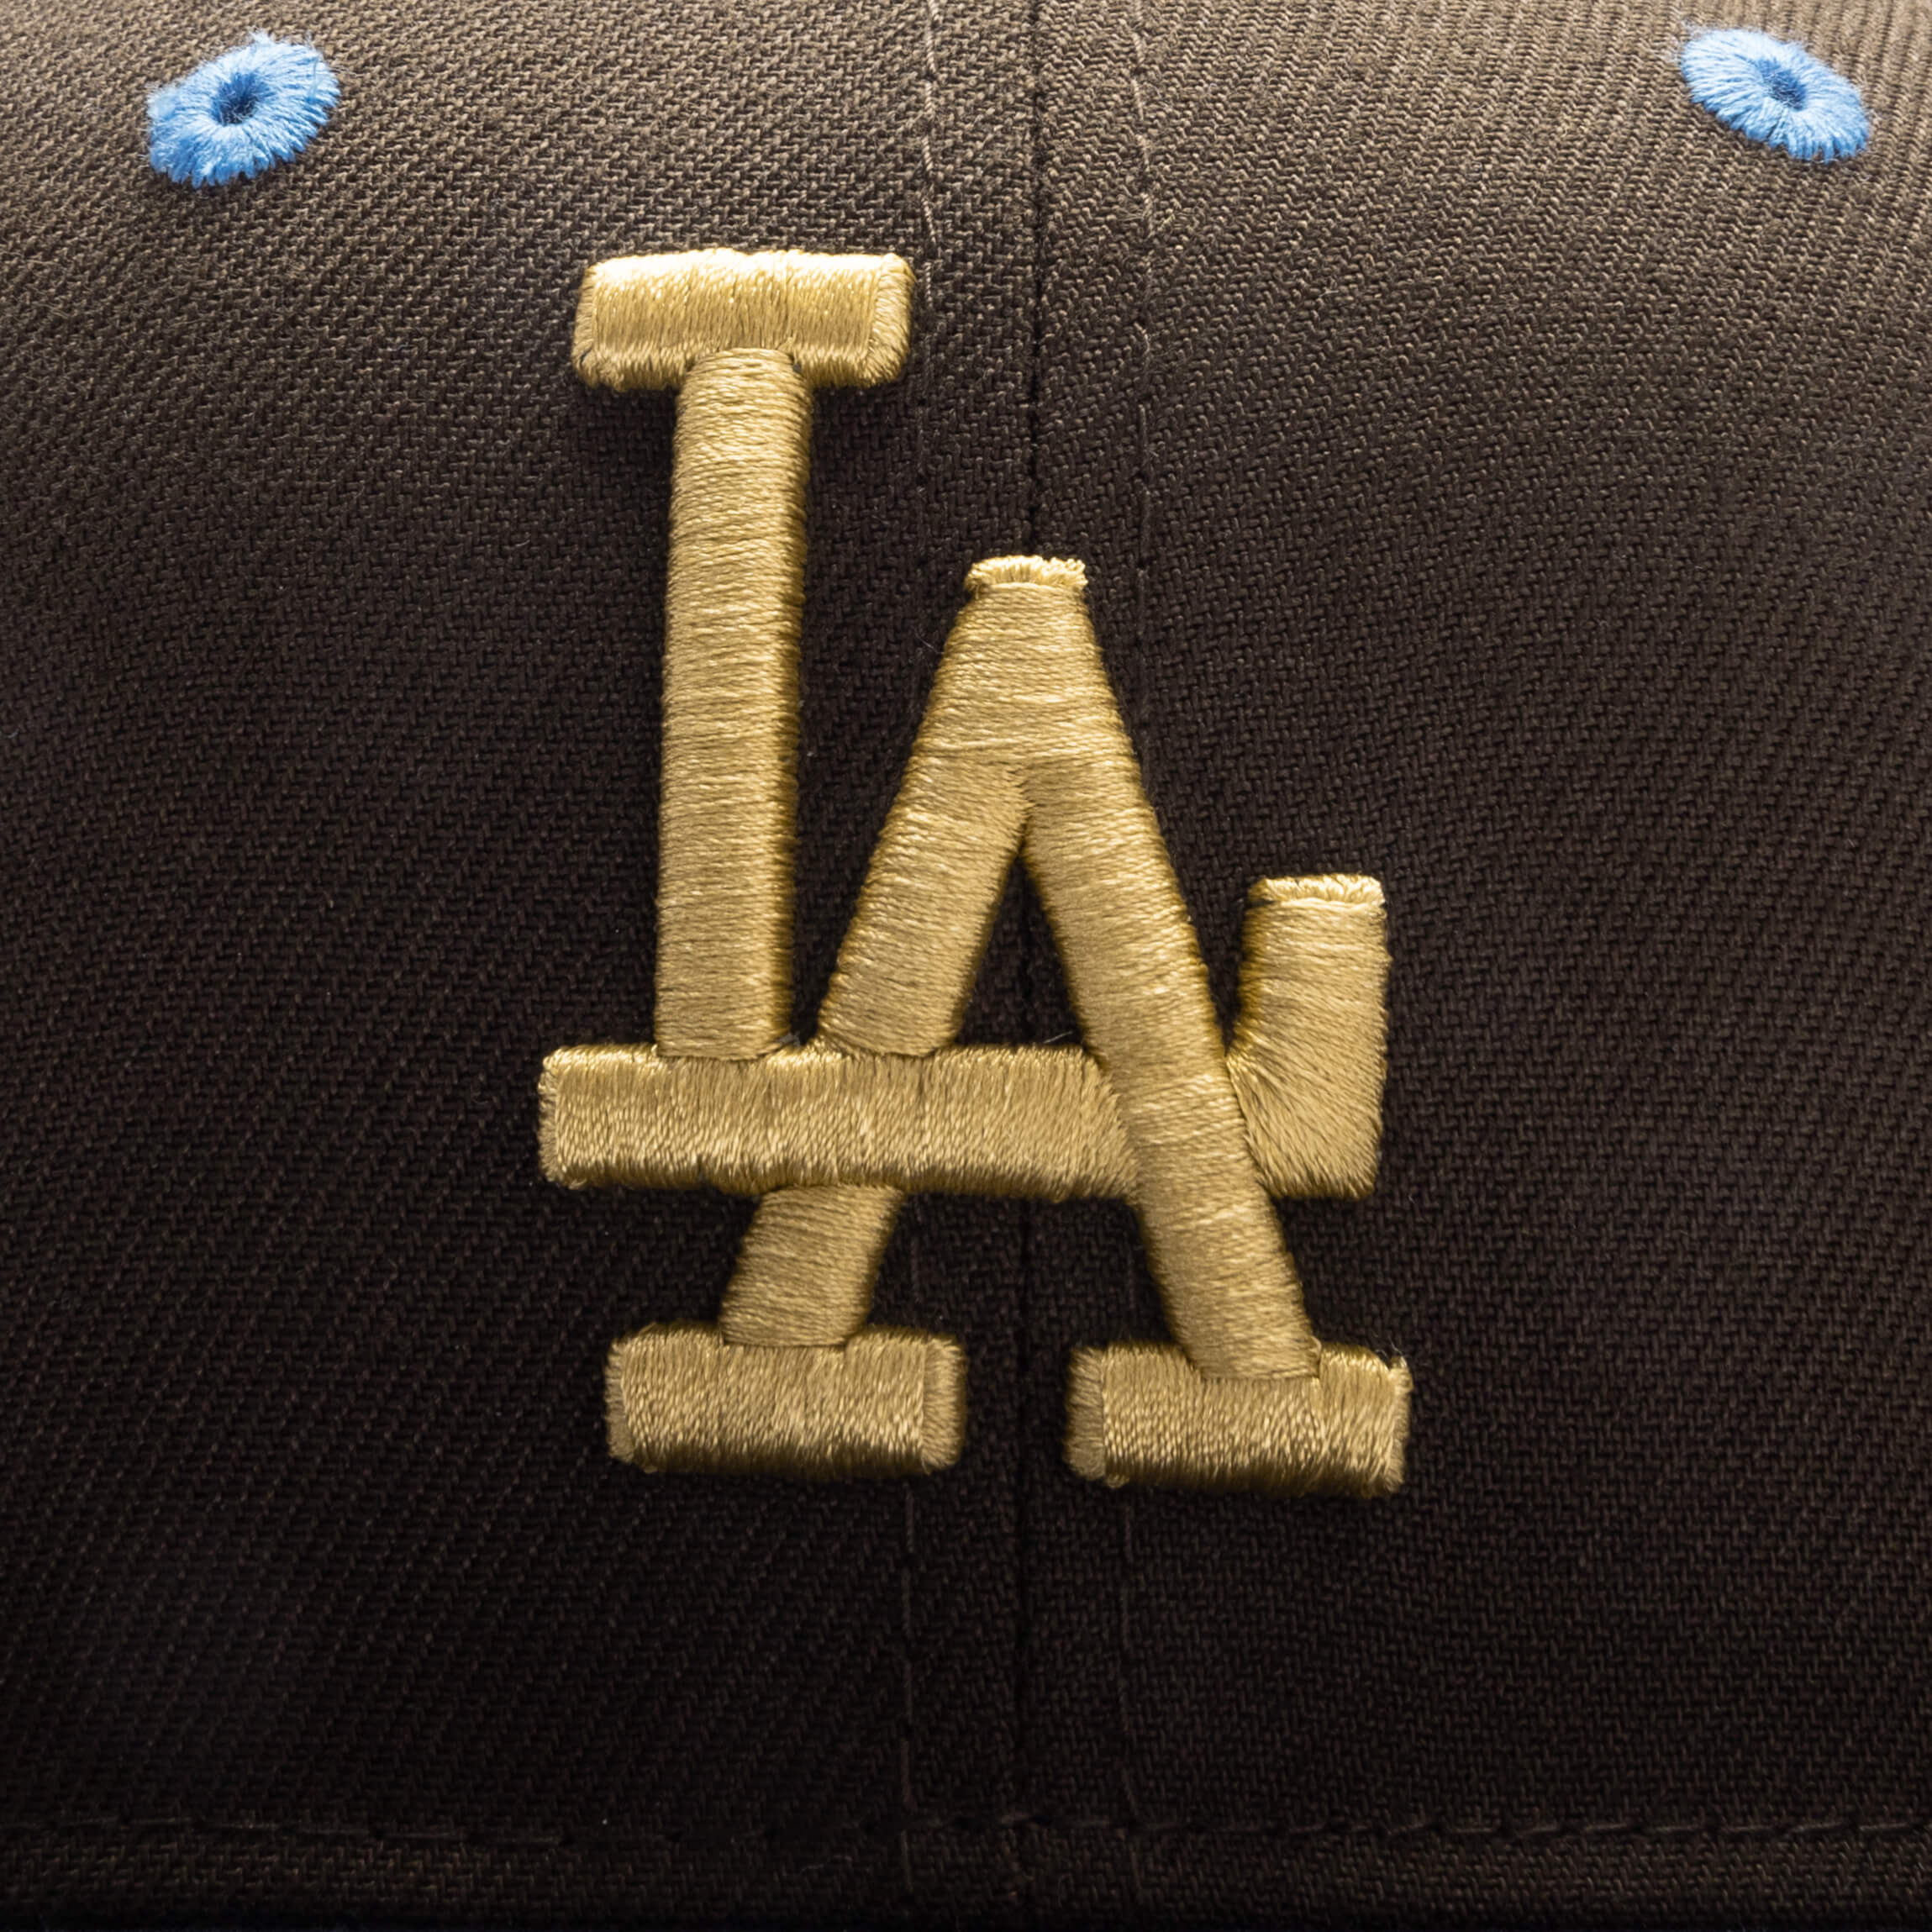 Los Angeles Dodgers x LV Air Jordan 11